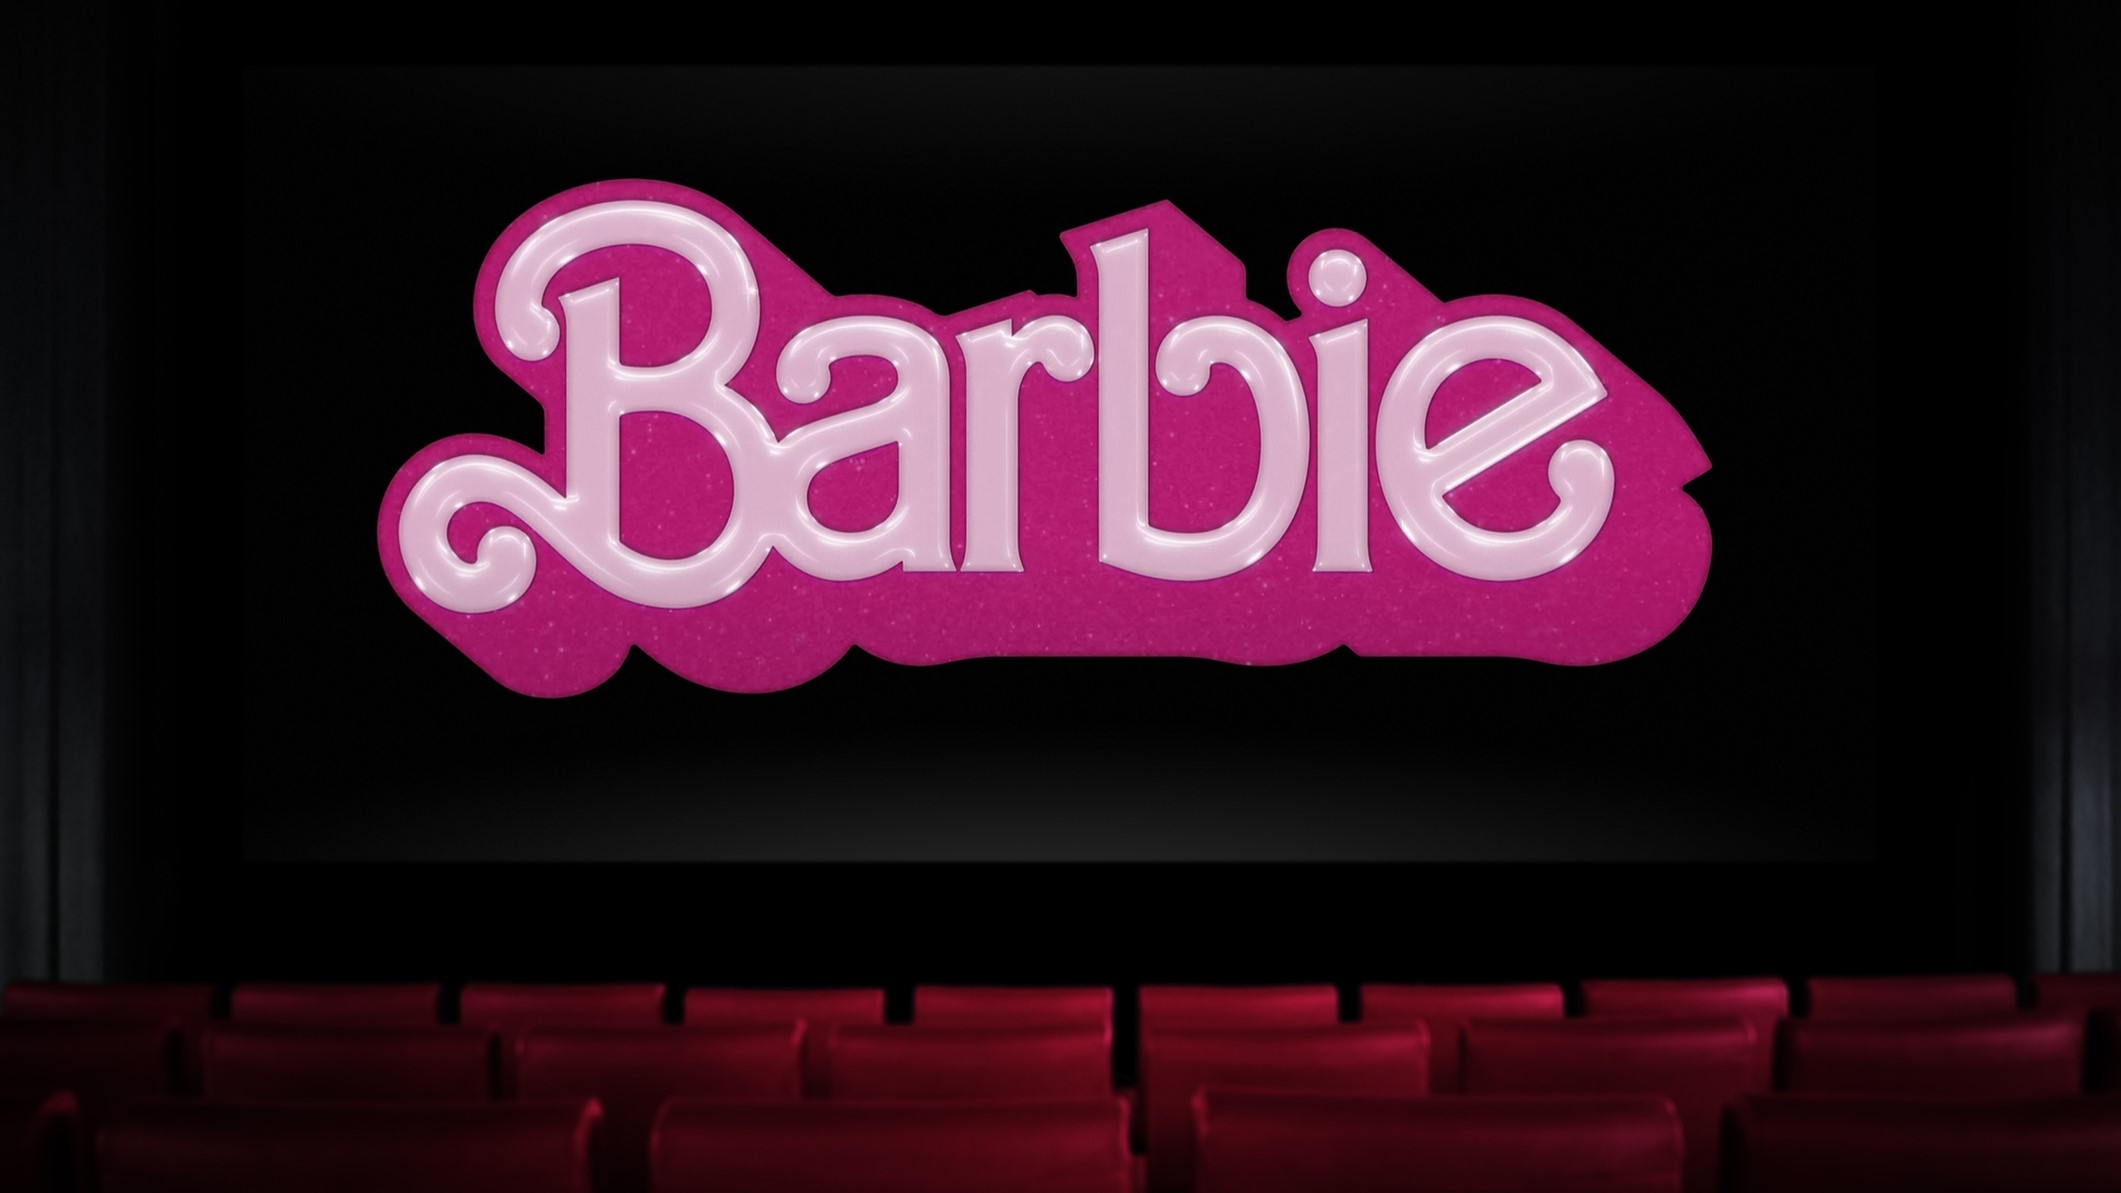 Movie theatre featuring the barbie movie